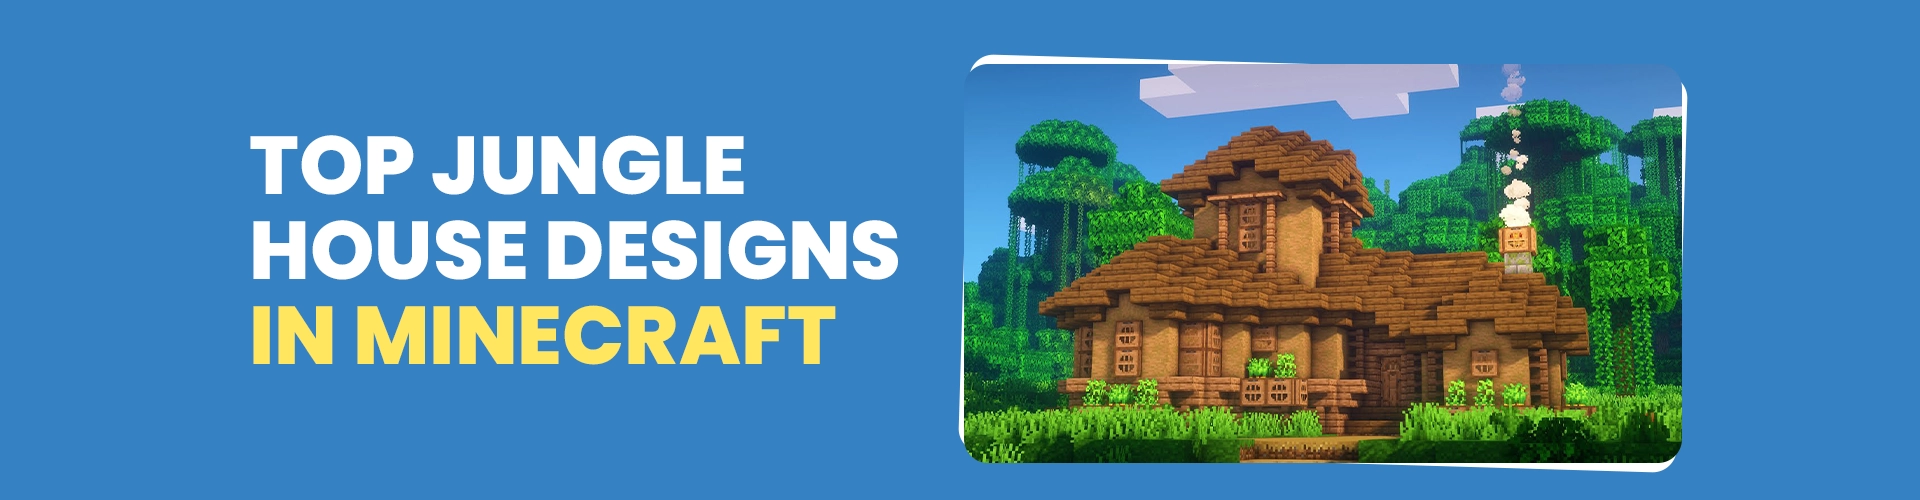 Jungle House Designs in Minecraft